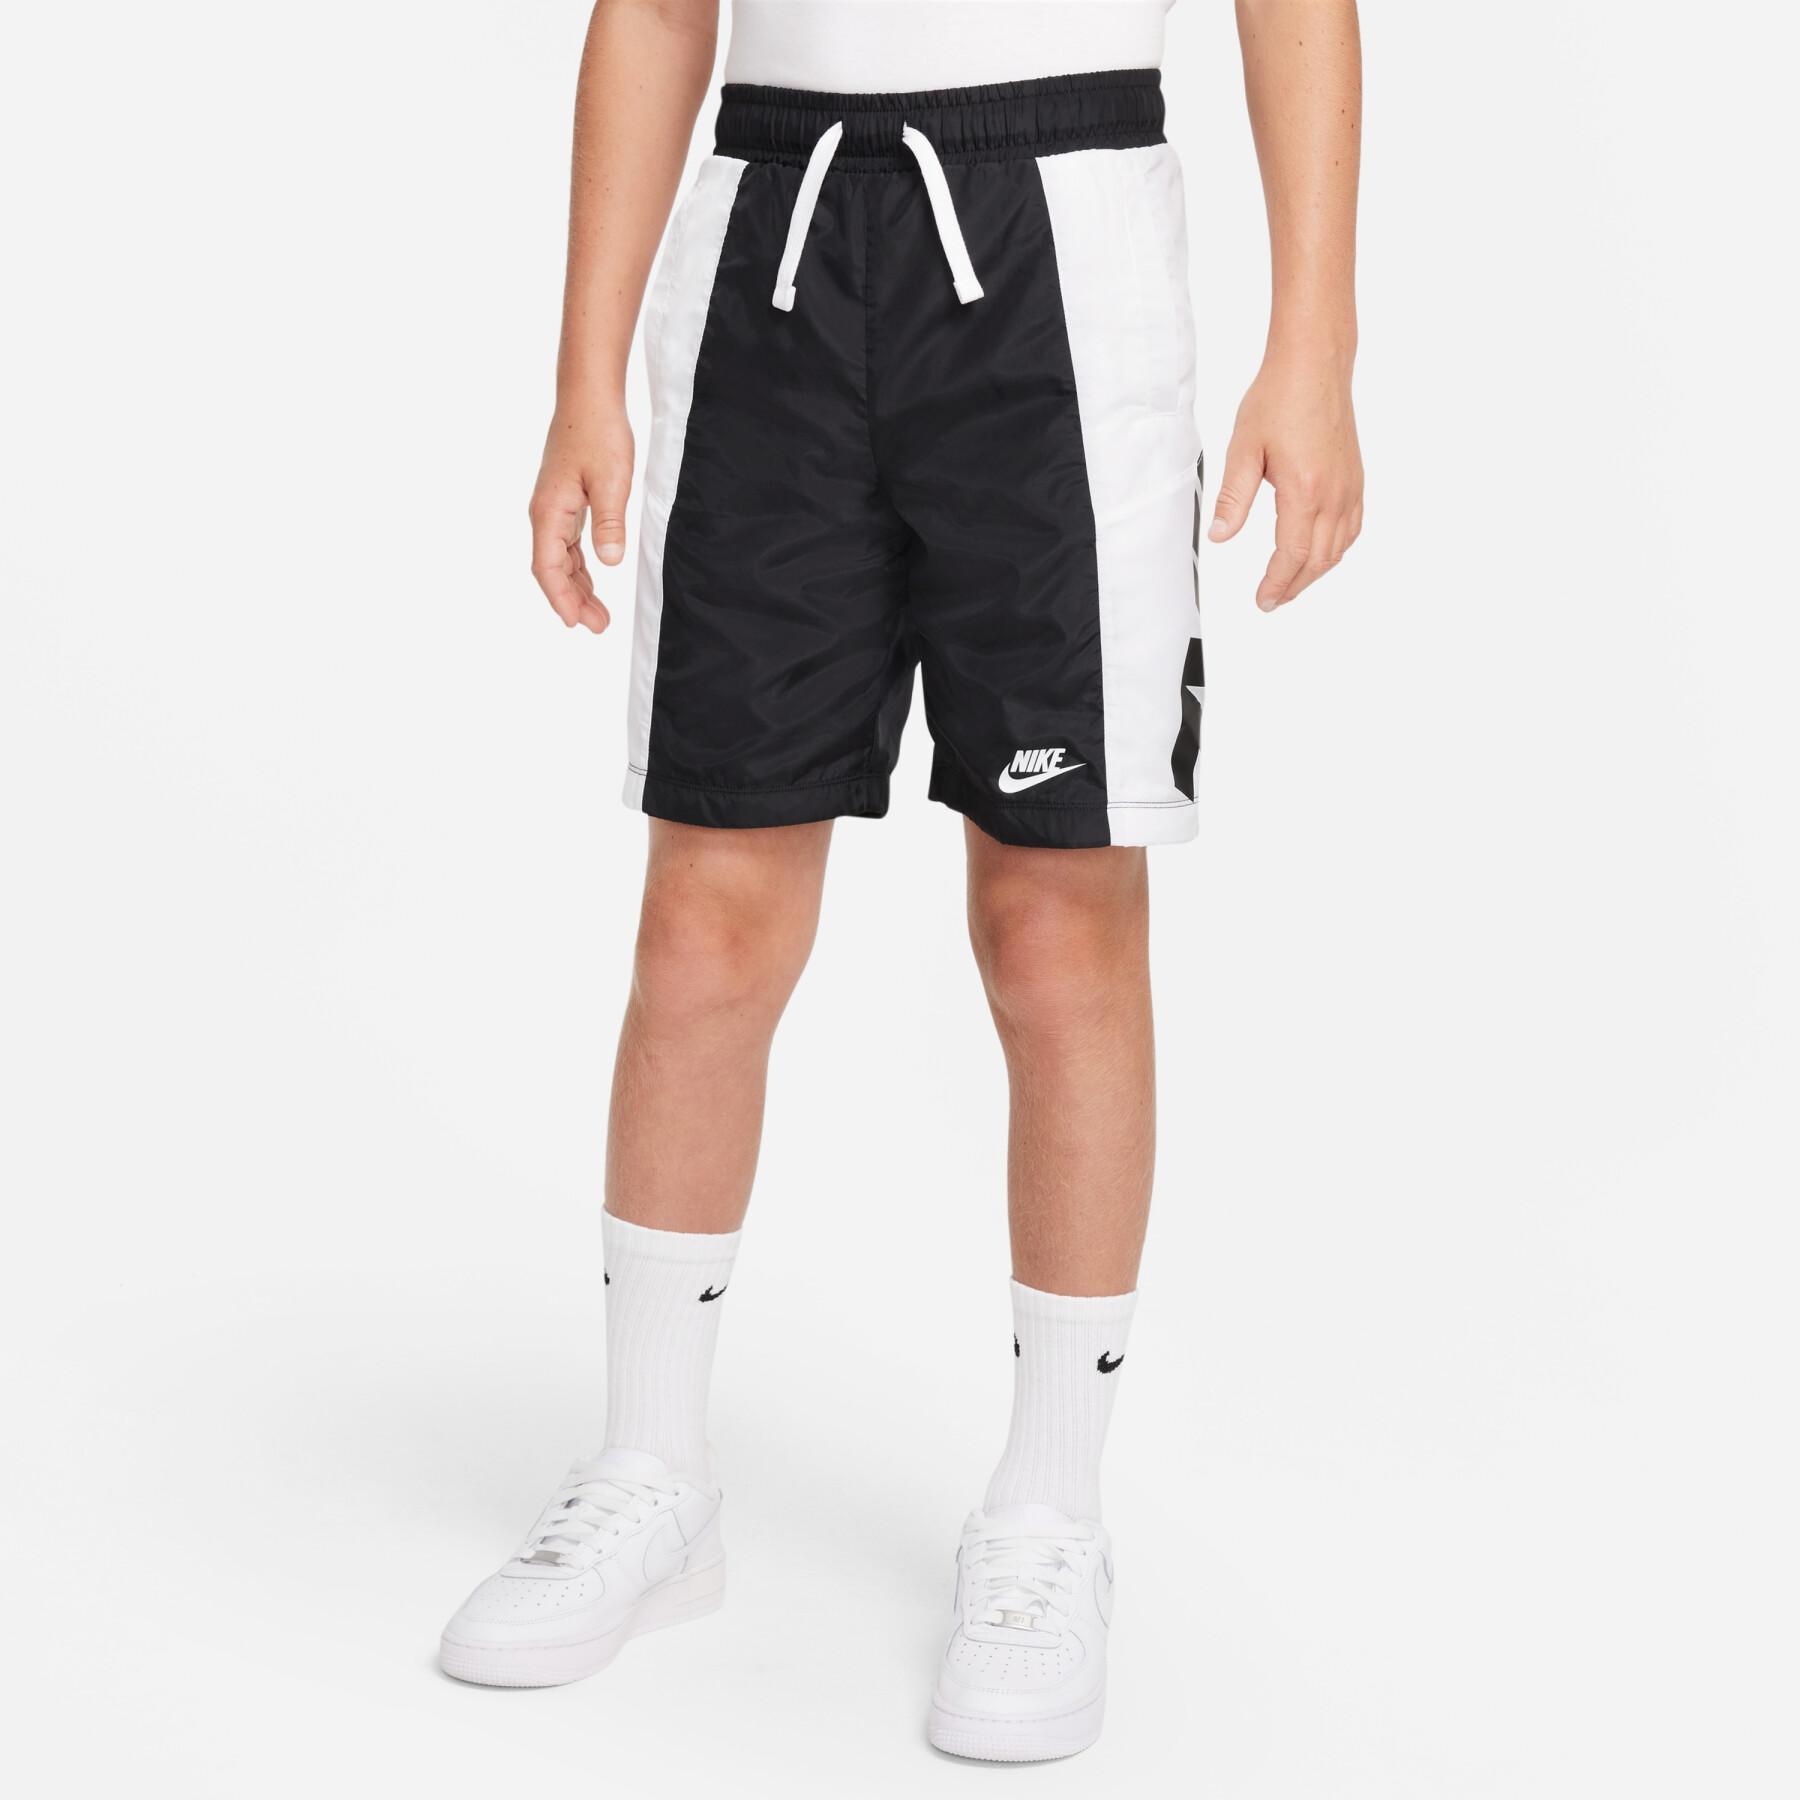 Pantaloncini per bambini Nike Amplify